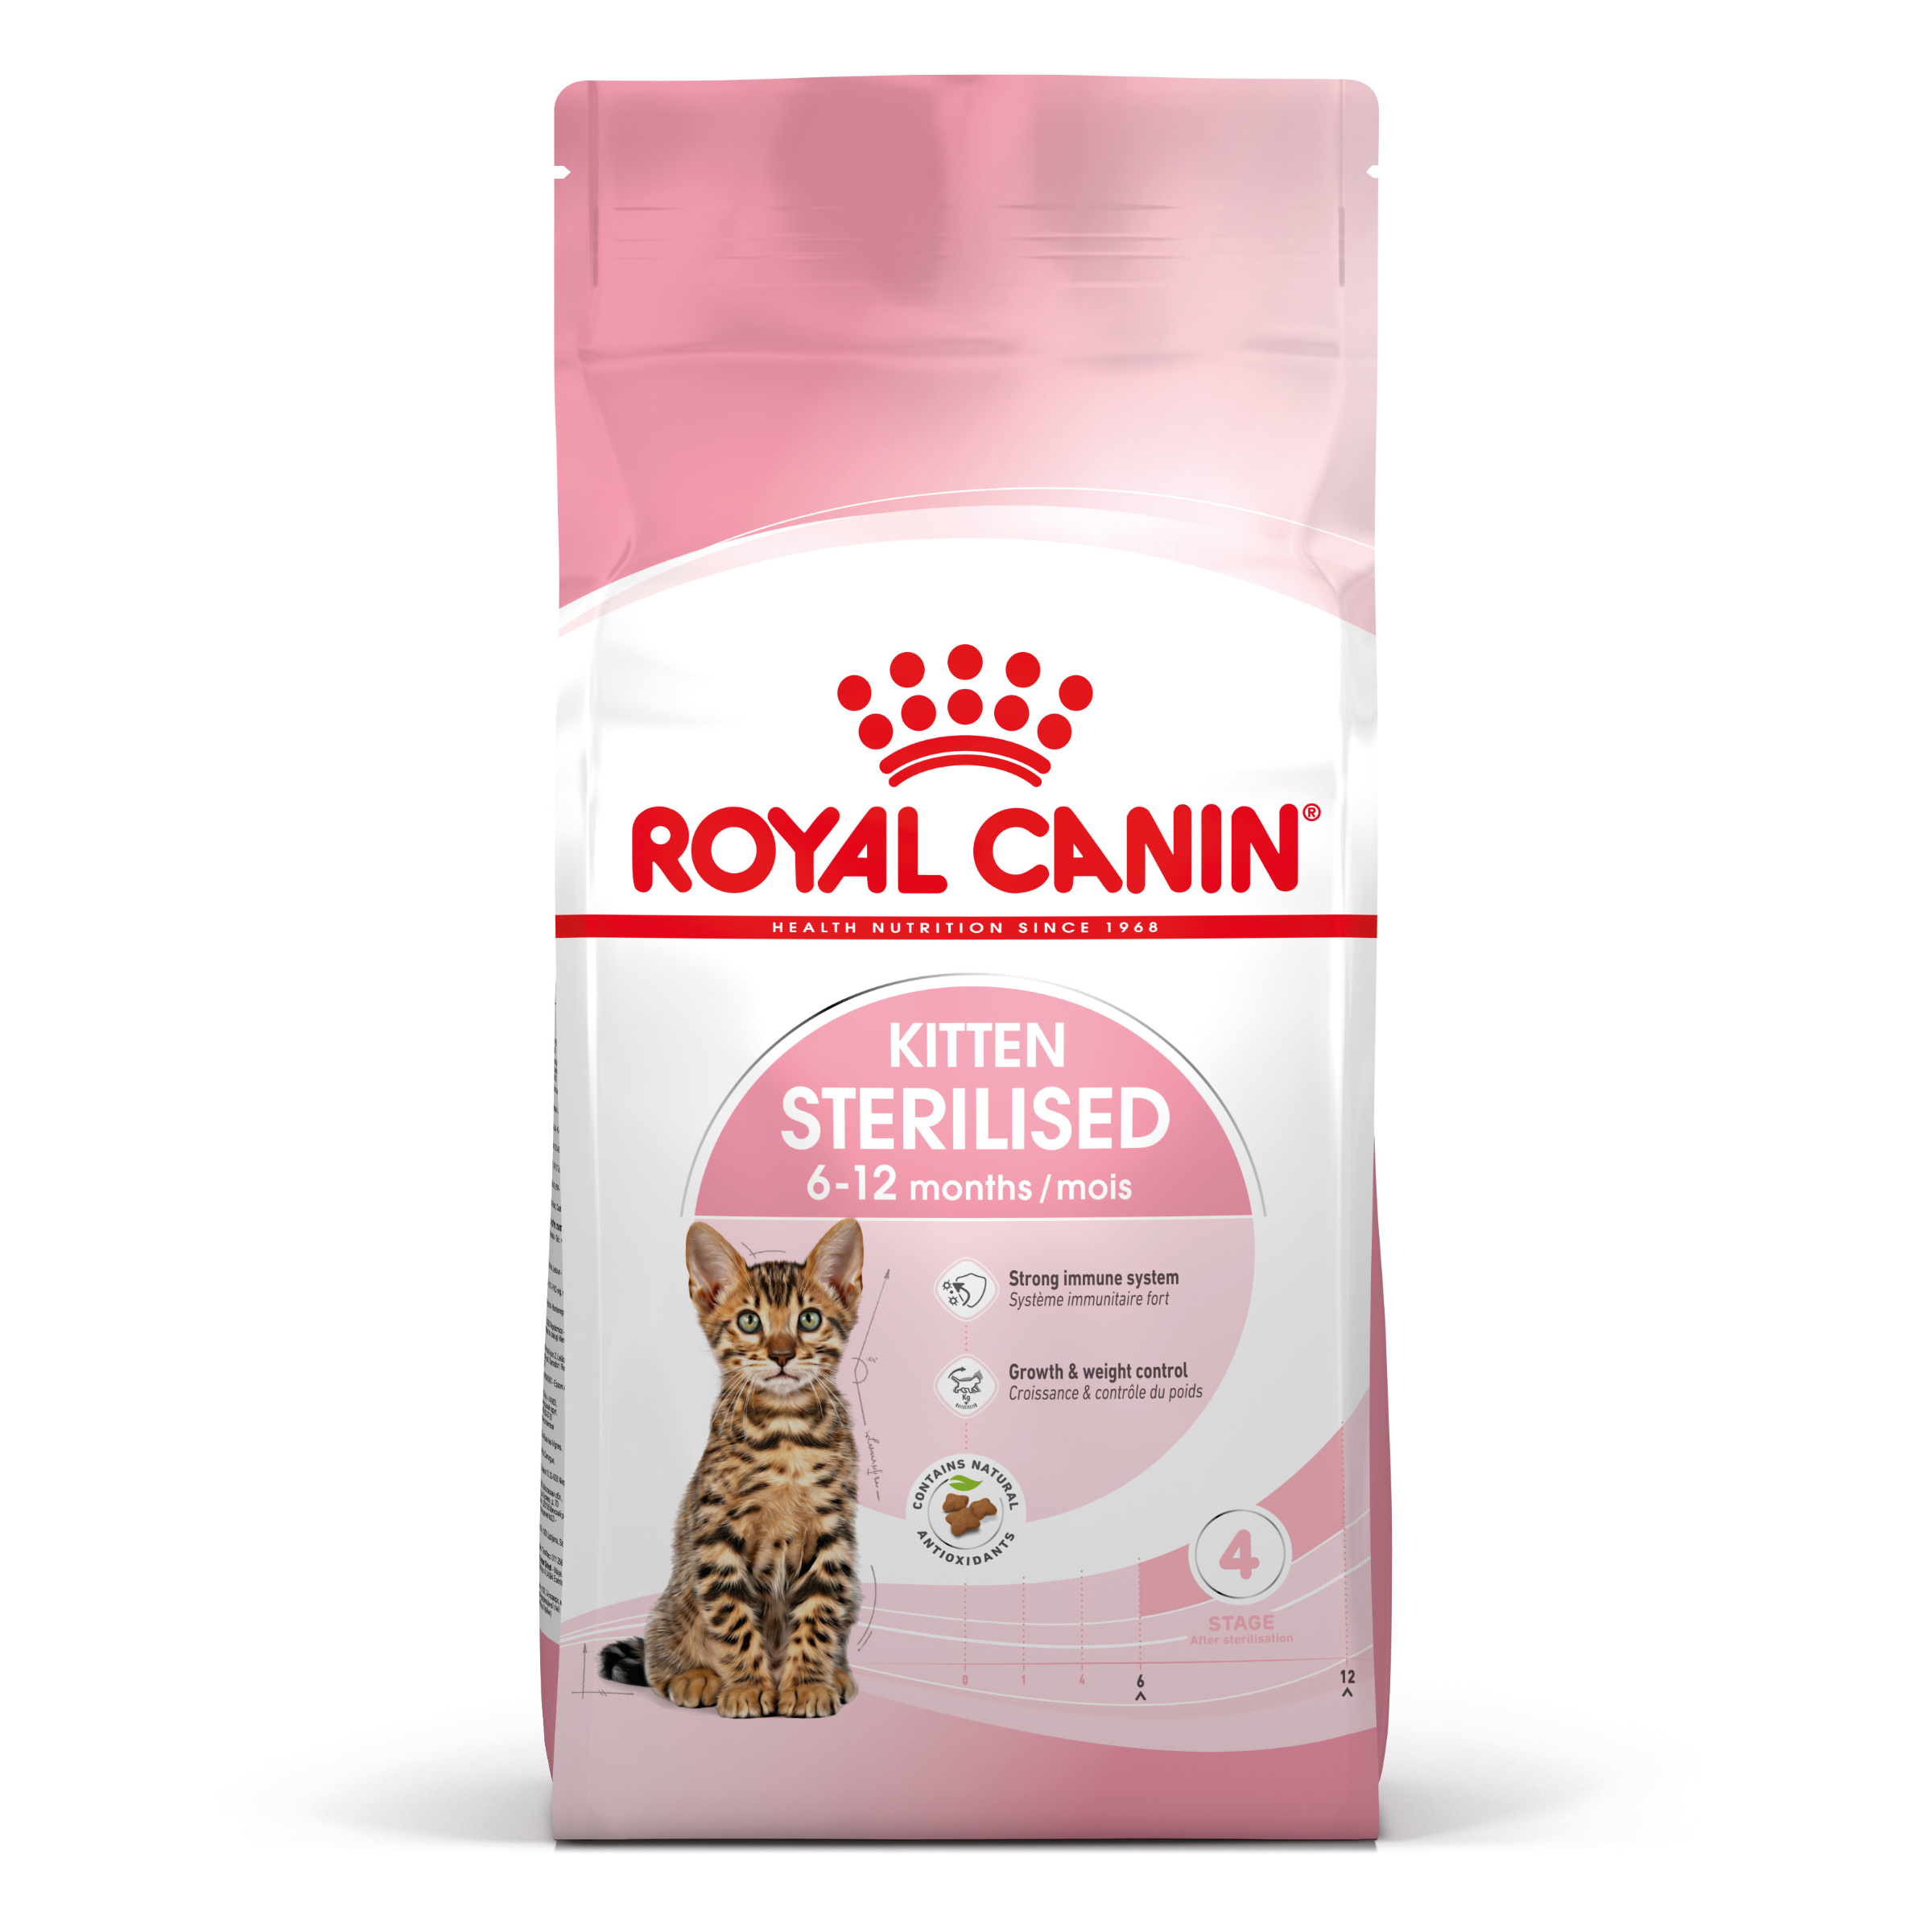 Royal Canin Kitten Sterilised - Kattenvoer voor gesteriliseerde/gecastreerde kittens (6 tot 12 maanden) - 2kg